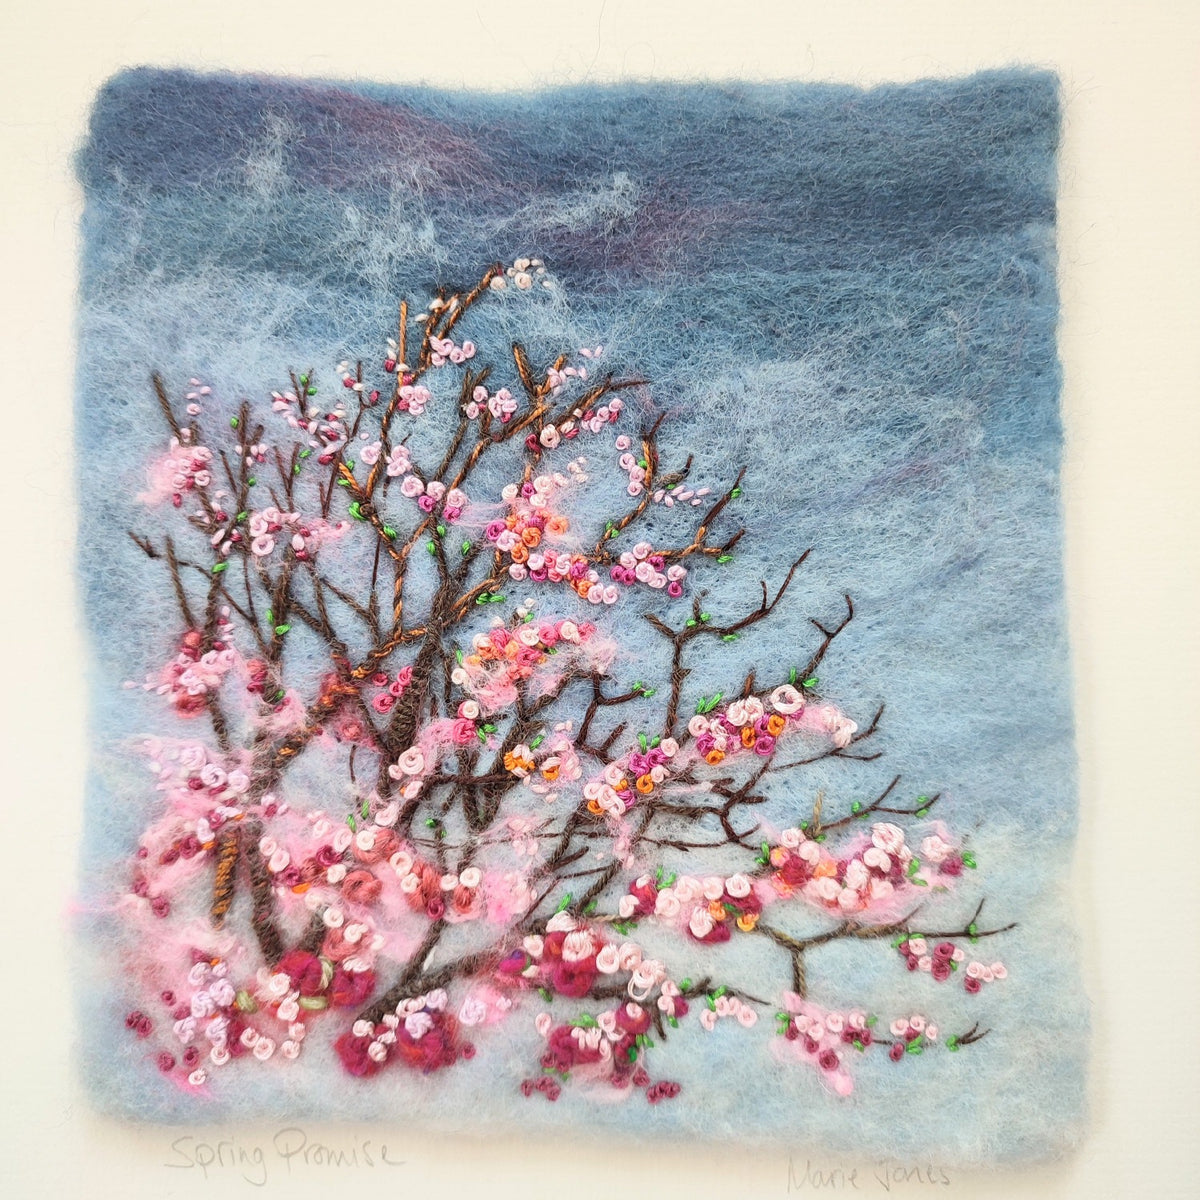 Spring Blossom by Marie Jones